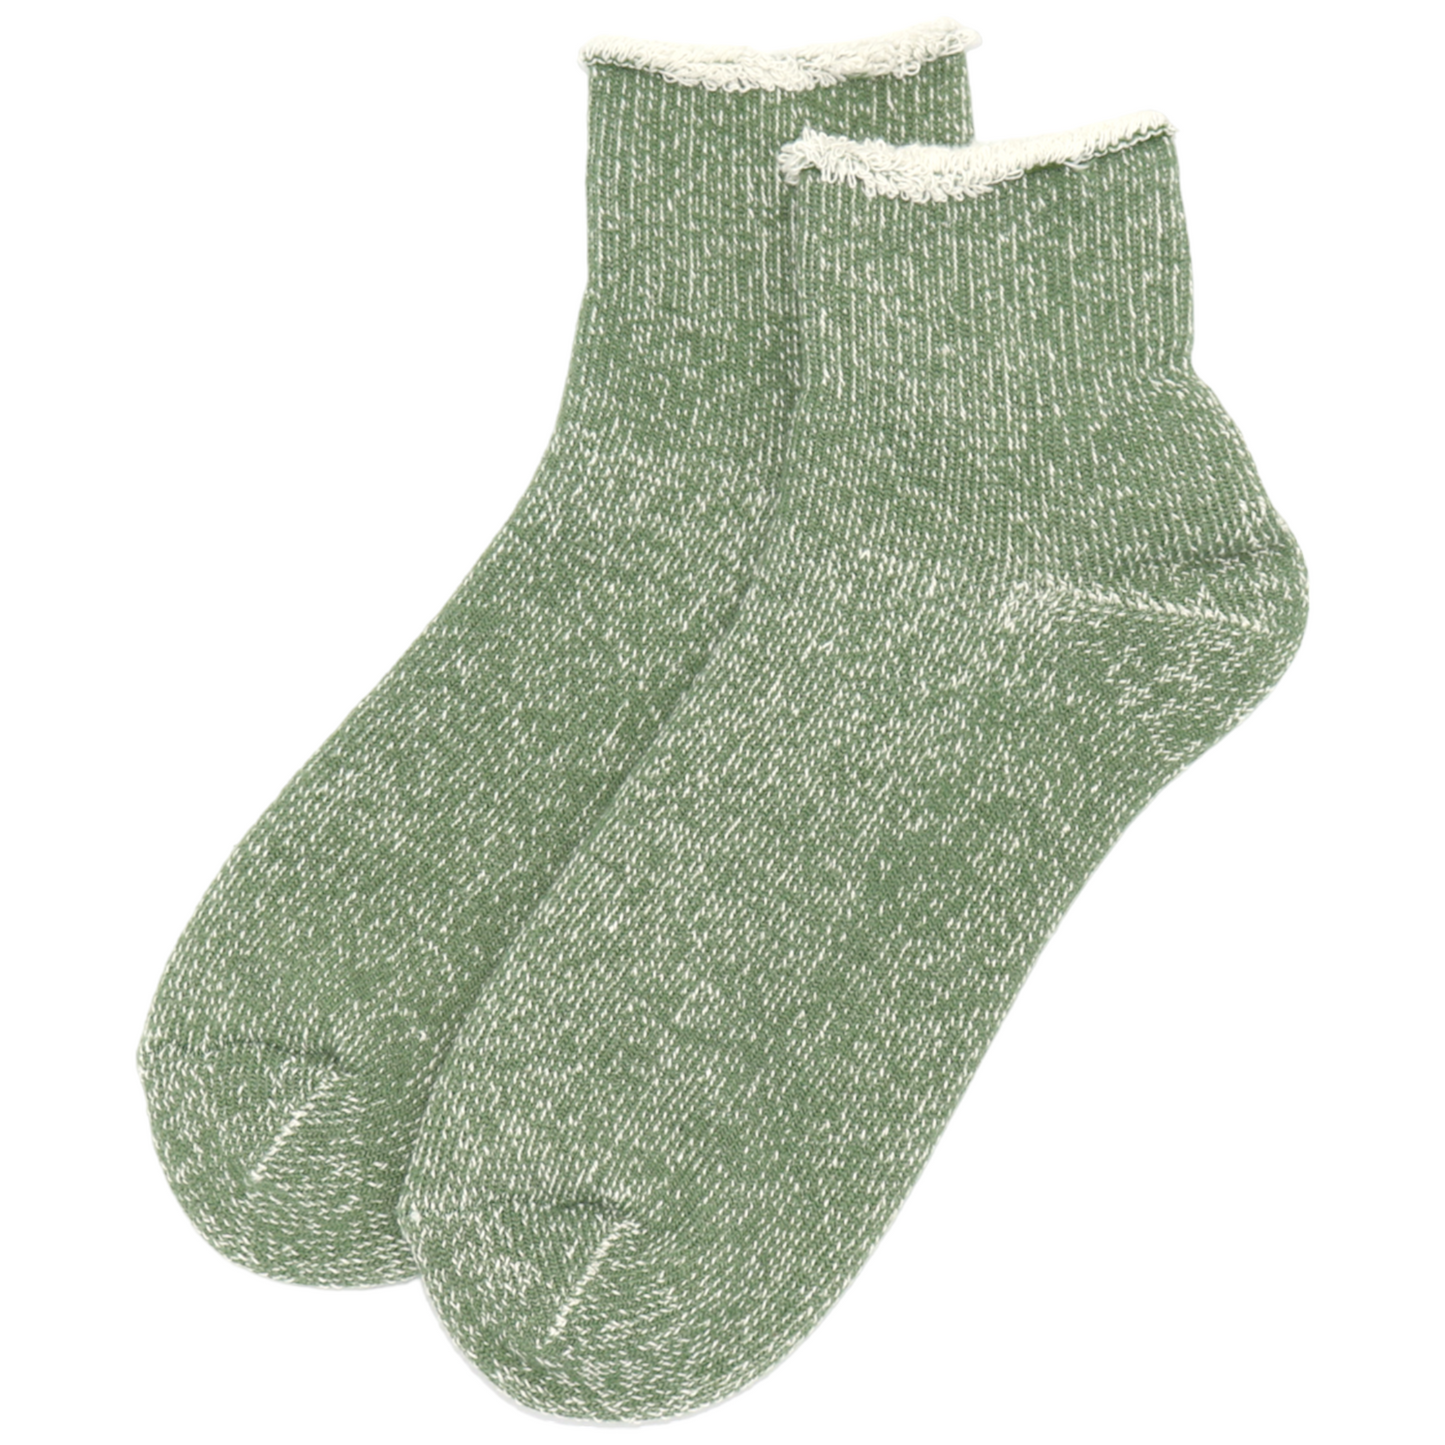 
                  
                    SUNNYSIDERS_ROTOTO_R1294 DOUBLE FACE ANKLE SOCKS "COTTON" GREEN_Socks
                  
                